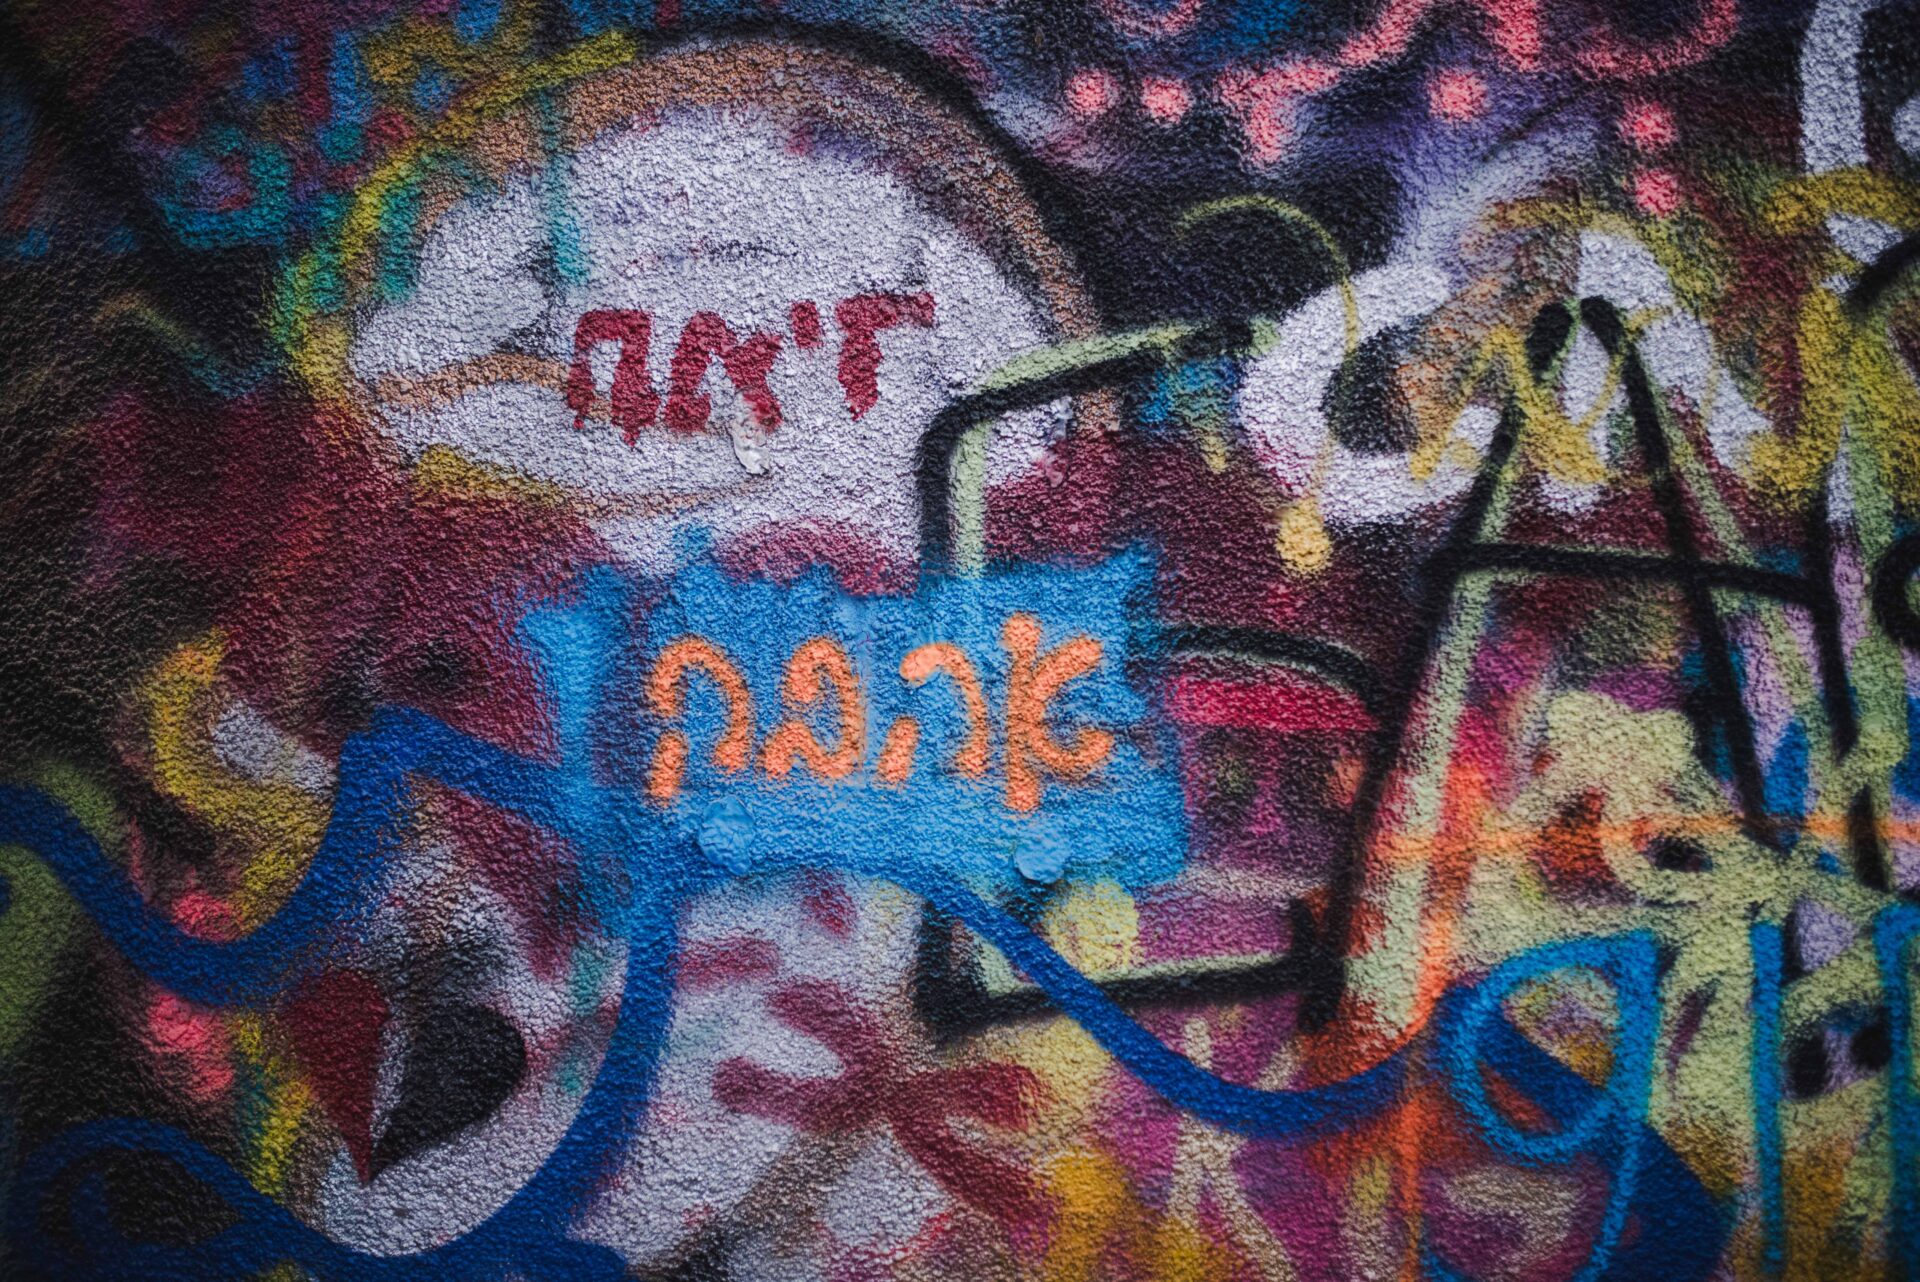 "Love" graffiti by Or Kaplan